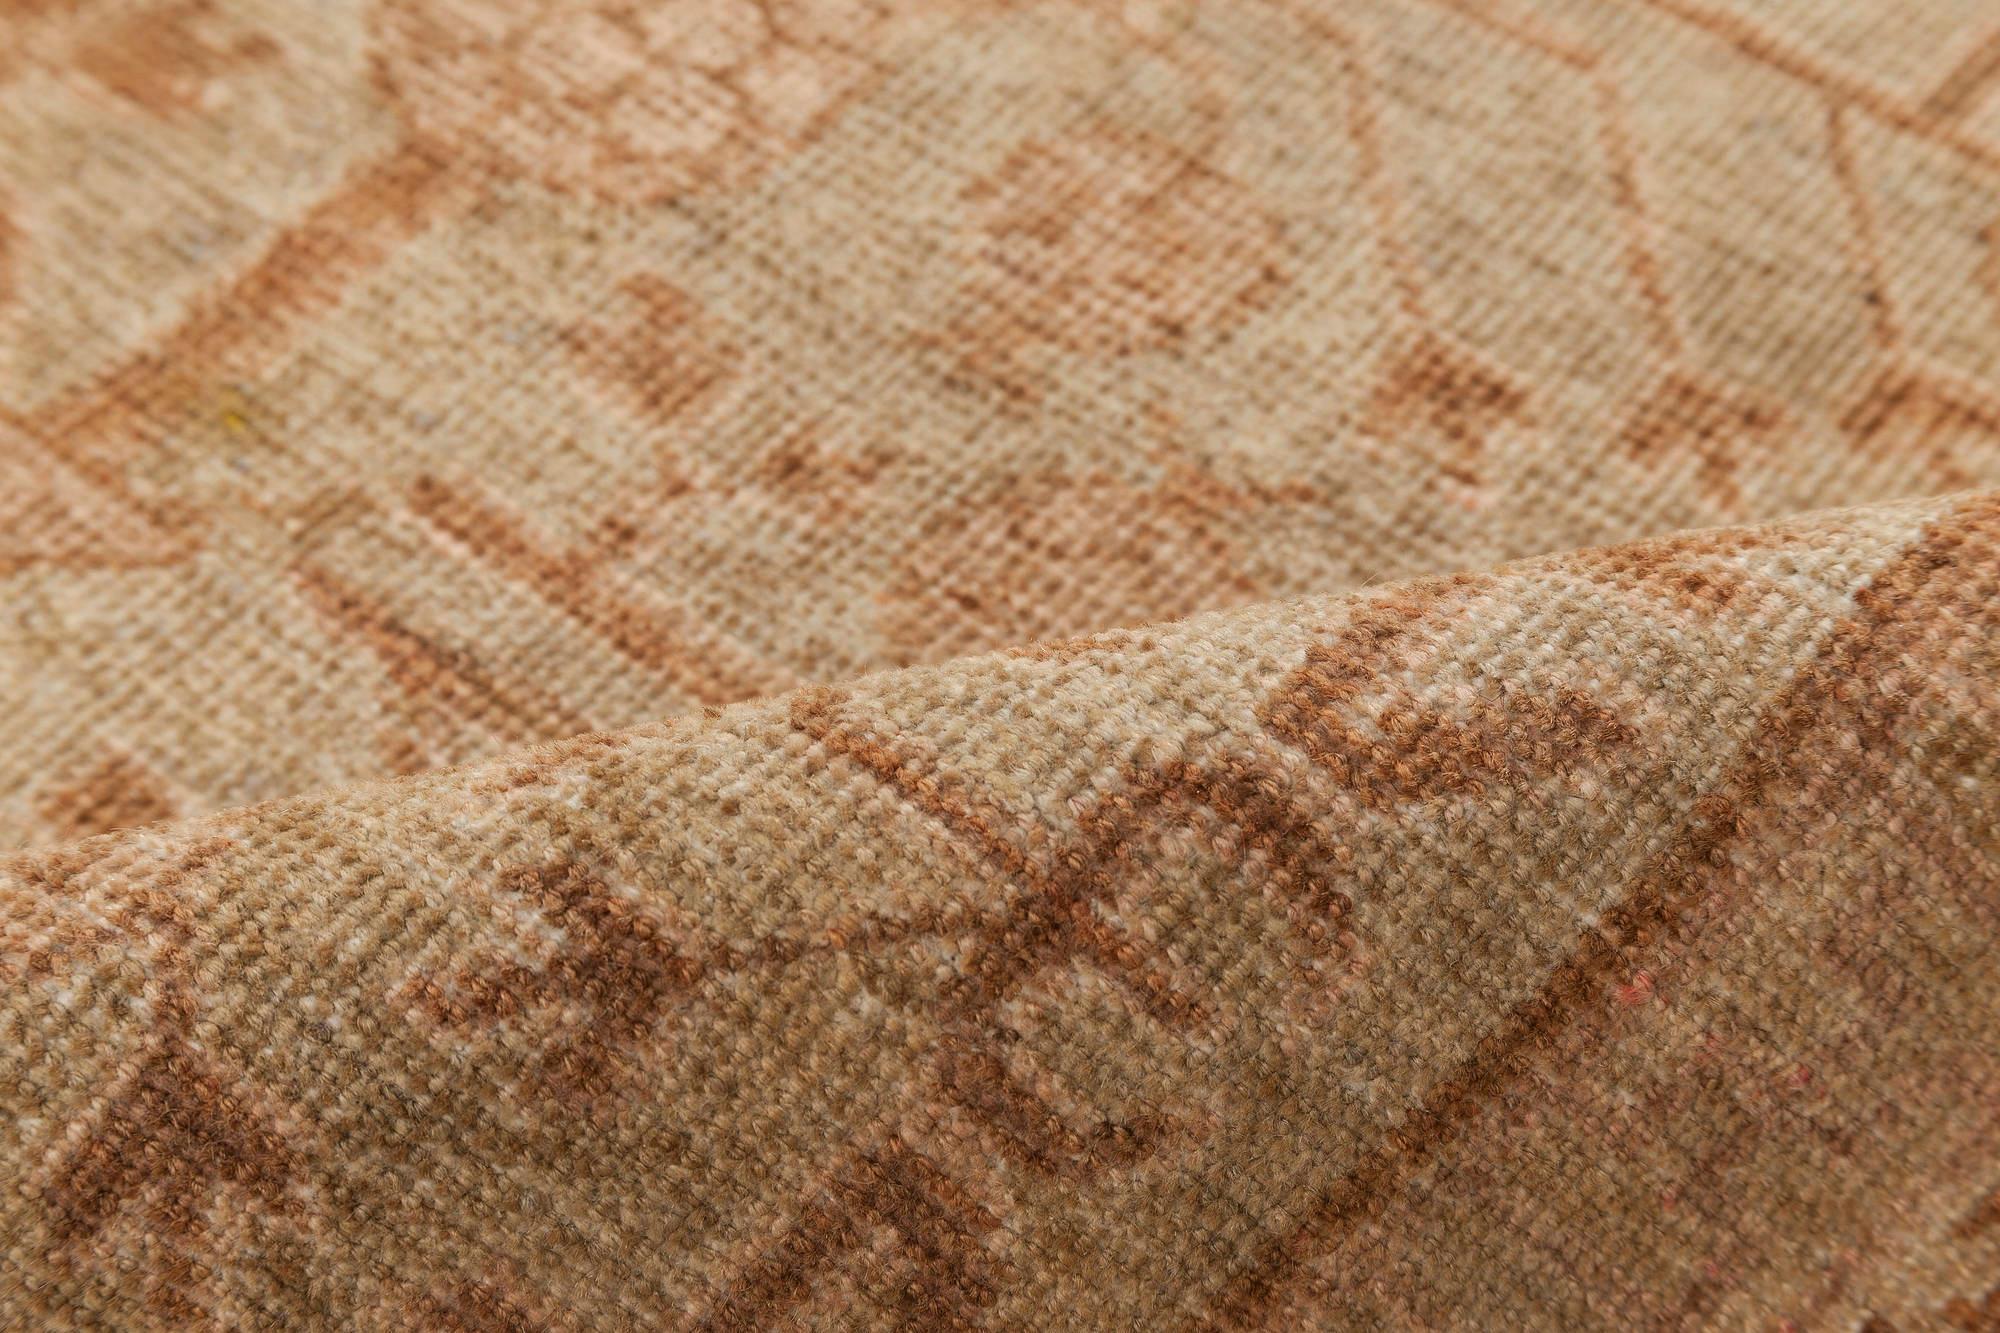 One-of-a-kind Samarkand botanic handmade wool rug
Size: 5'9